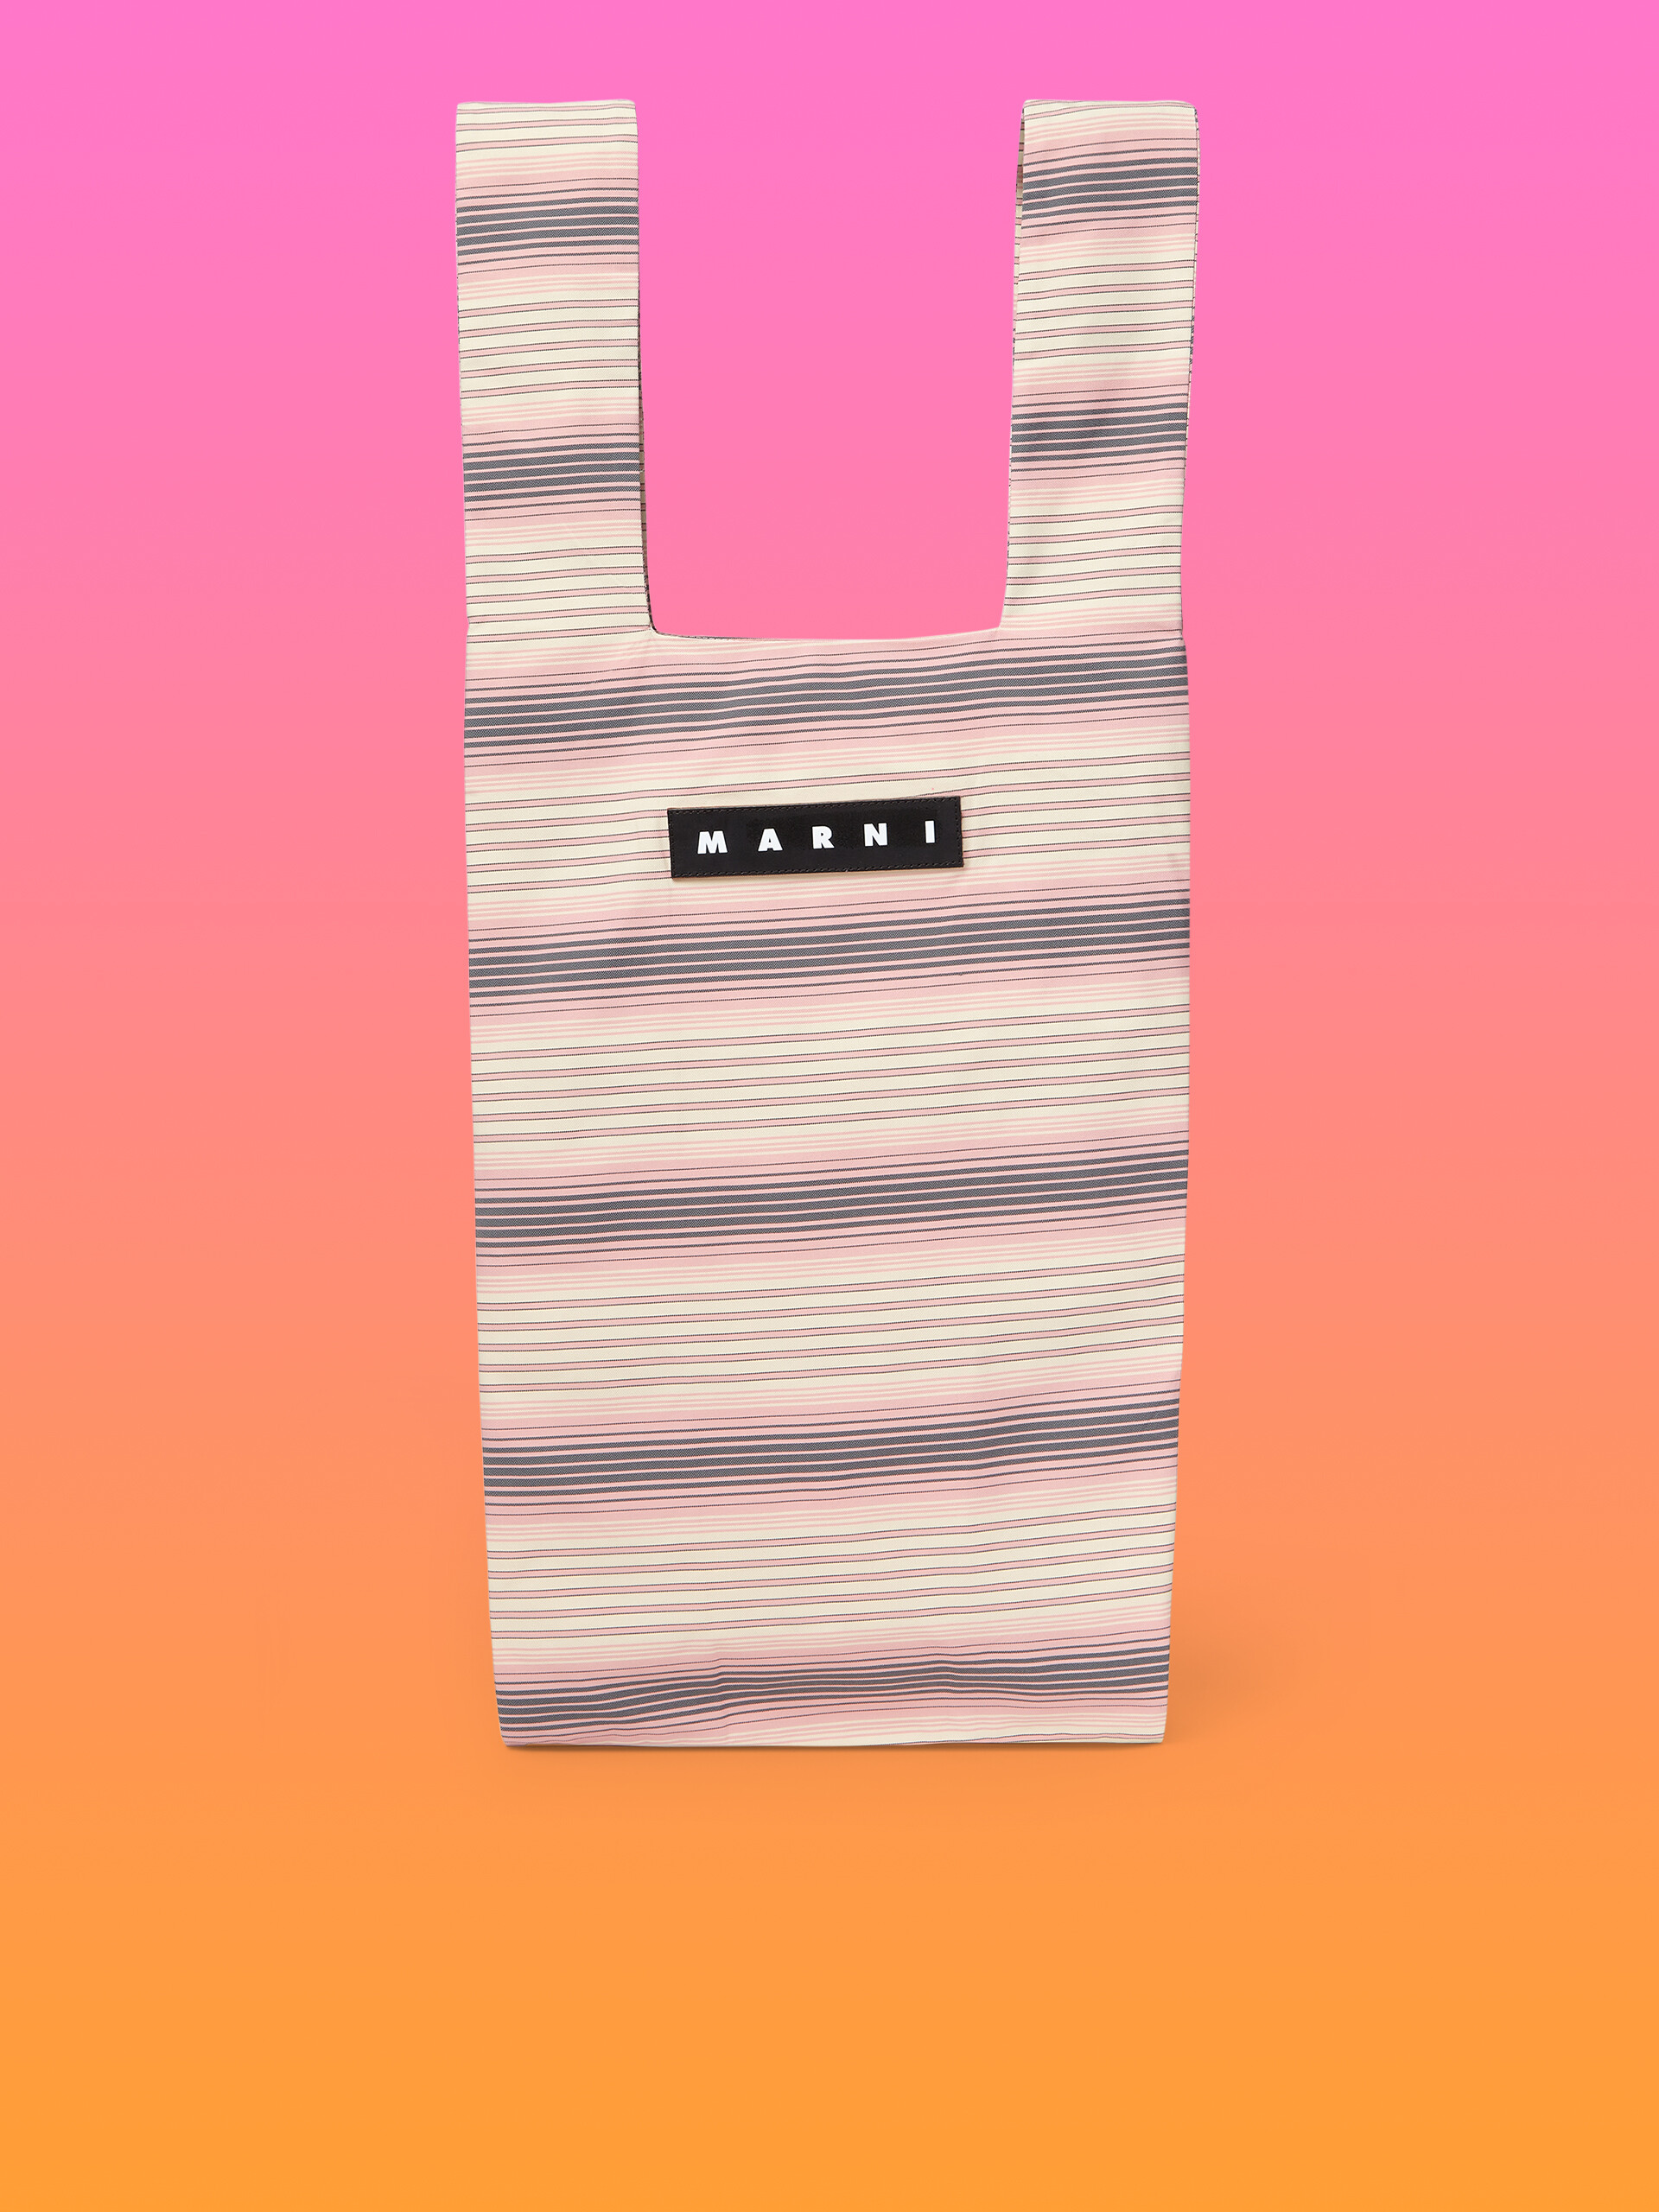 MARNI MARKET shopping bag with pink horizontal striped print - Bags - Image 1